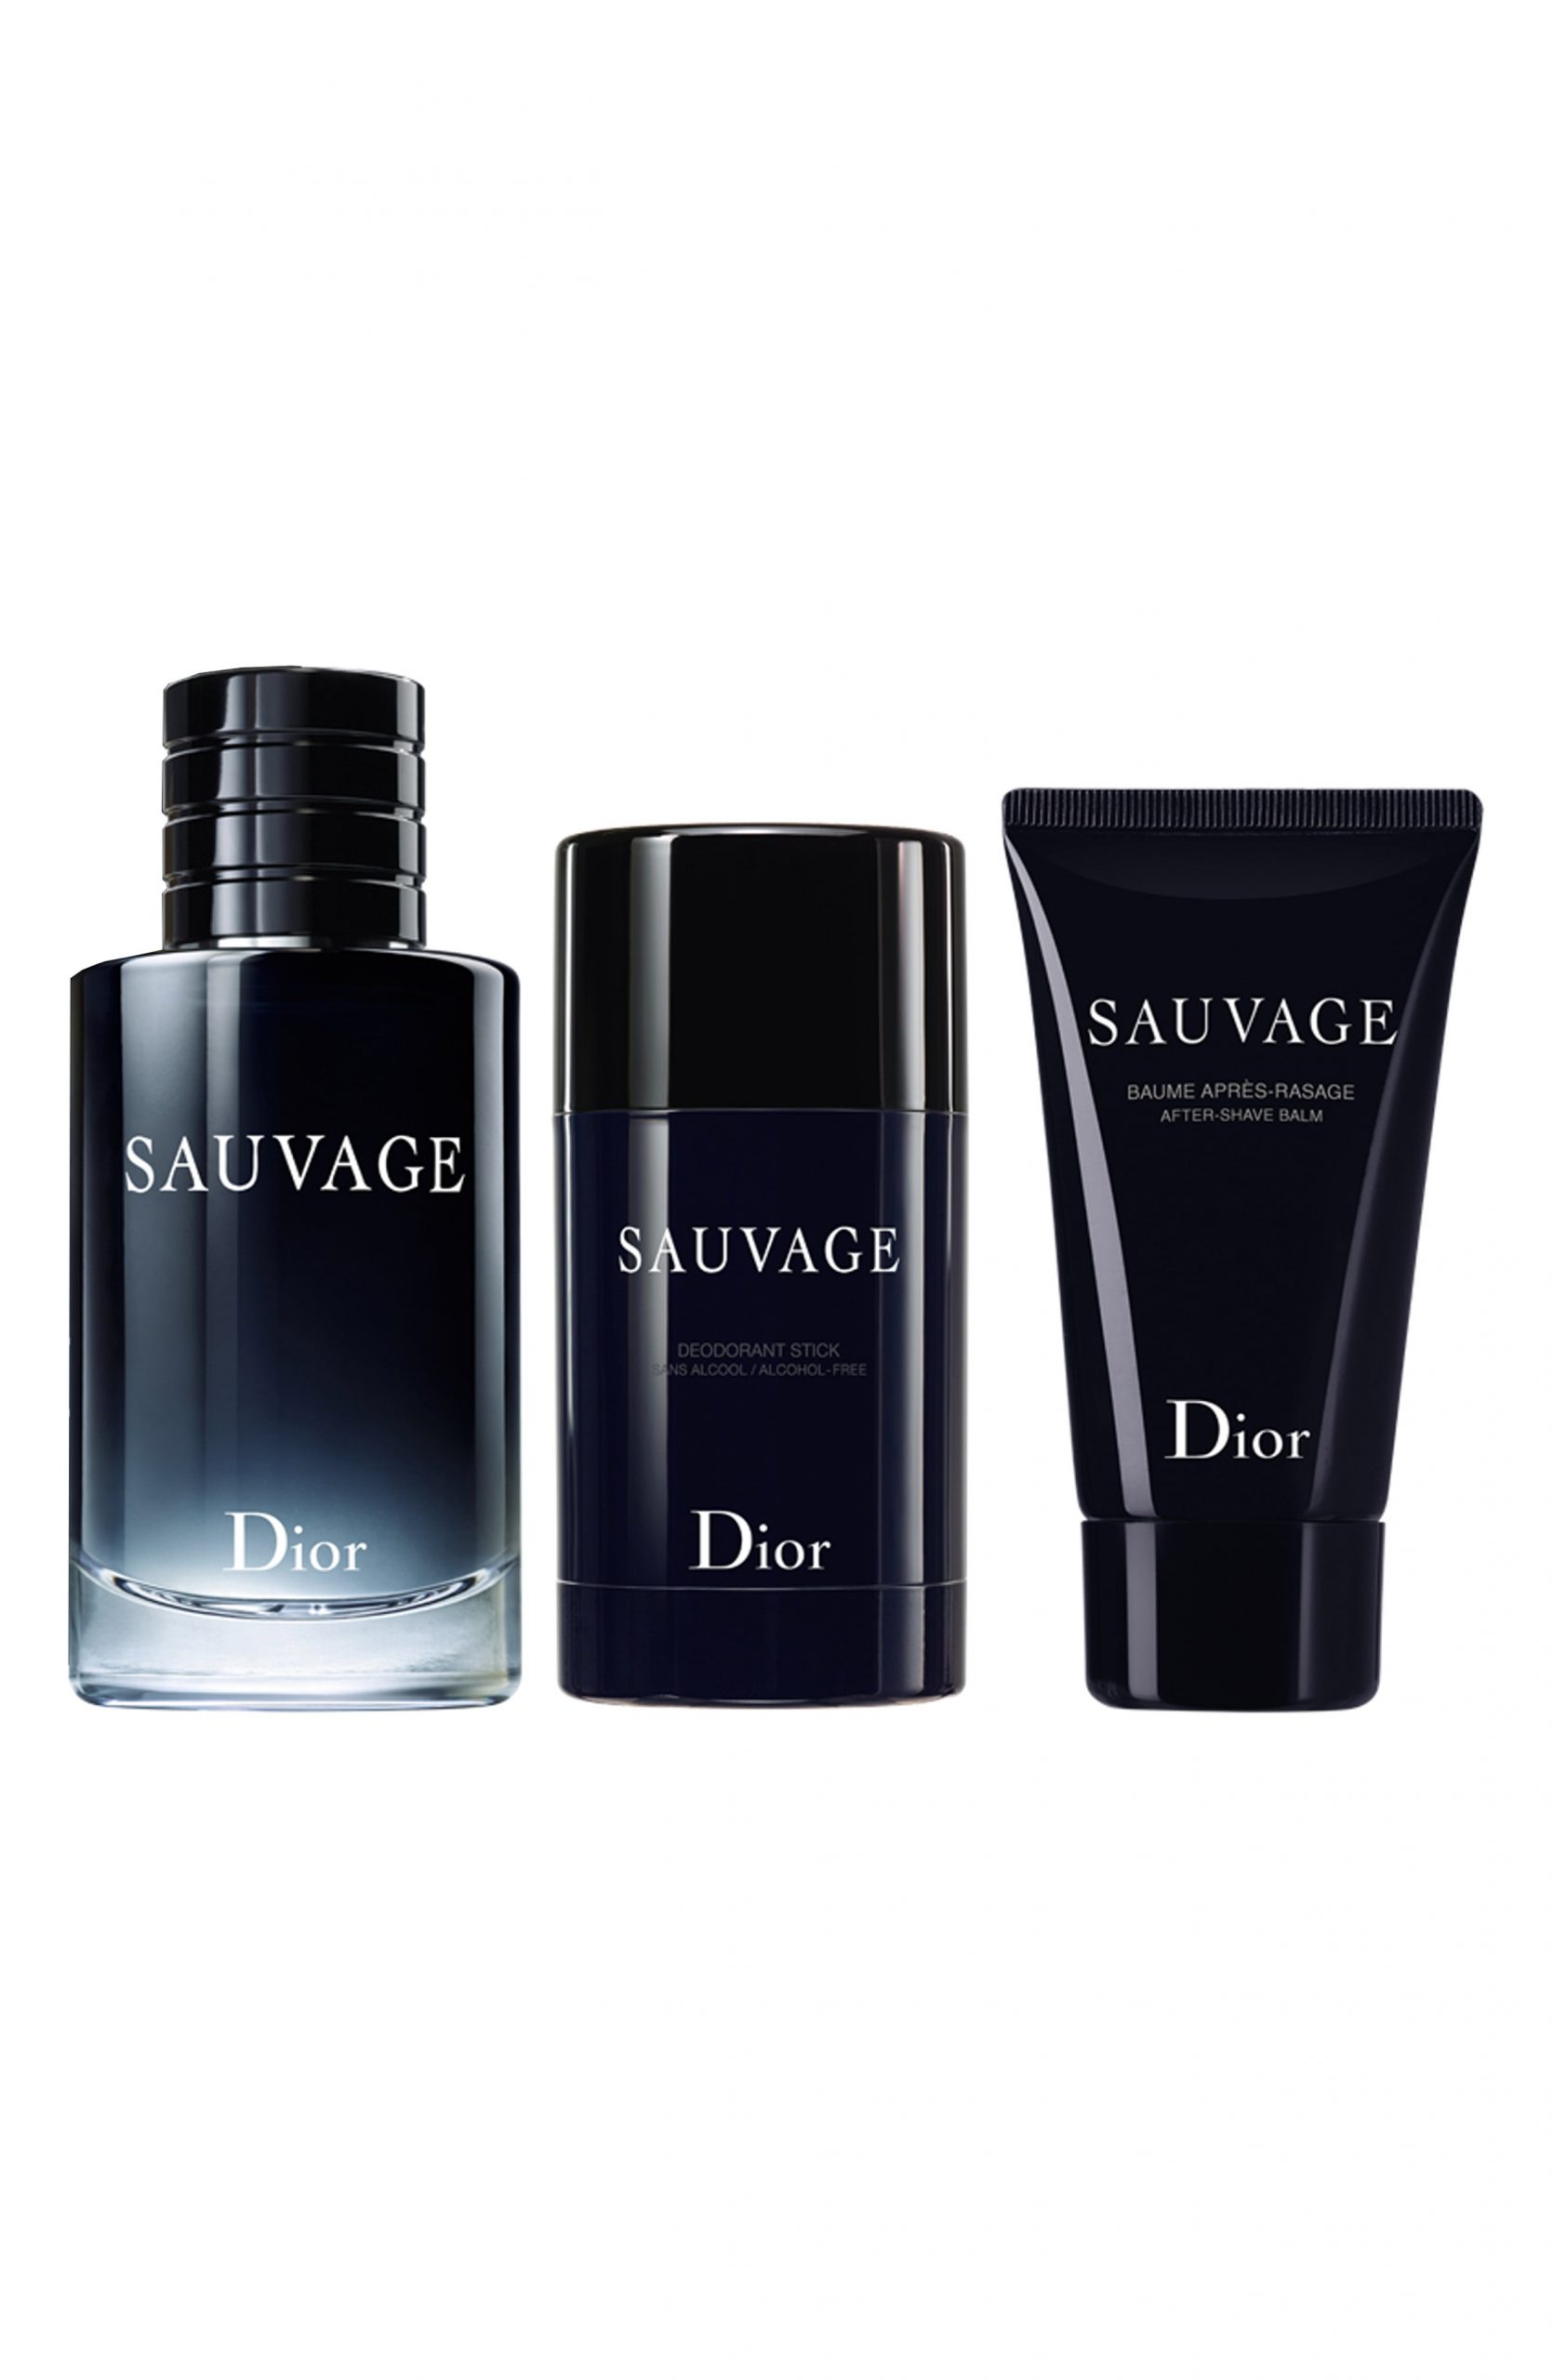 sauvage perfume set